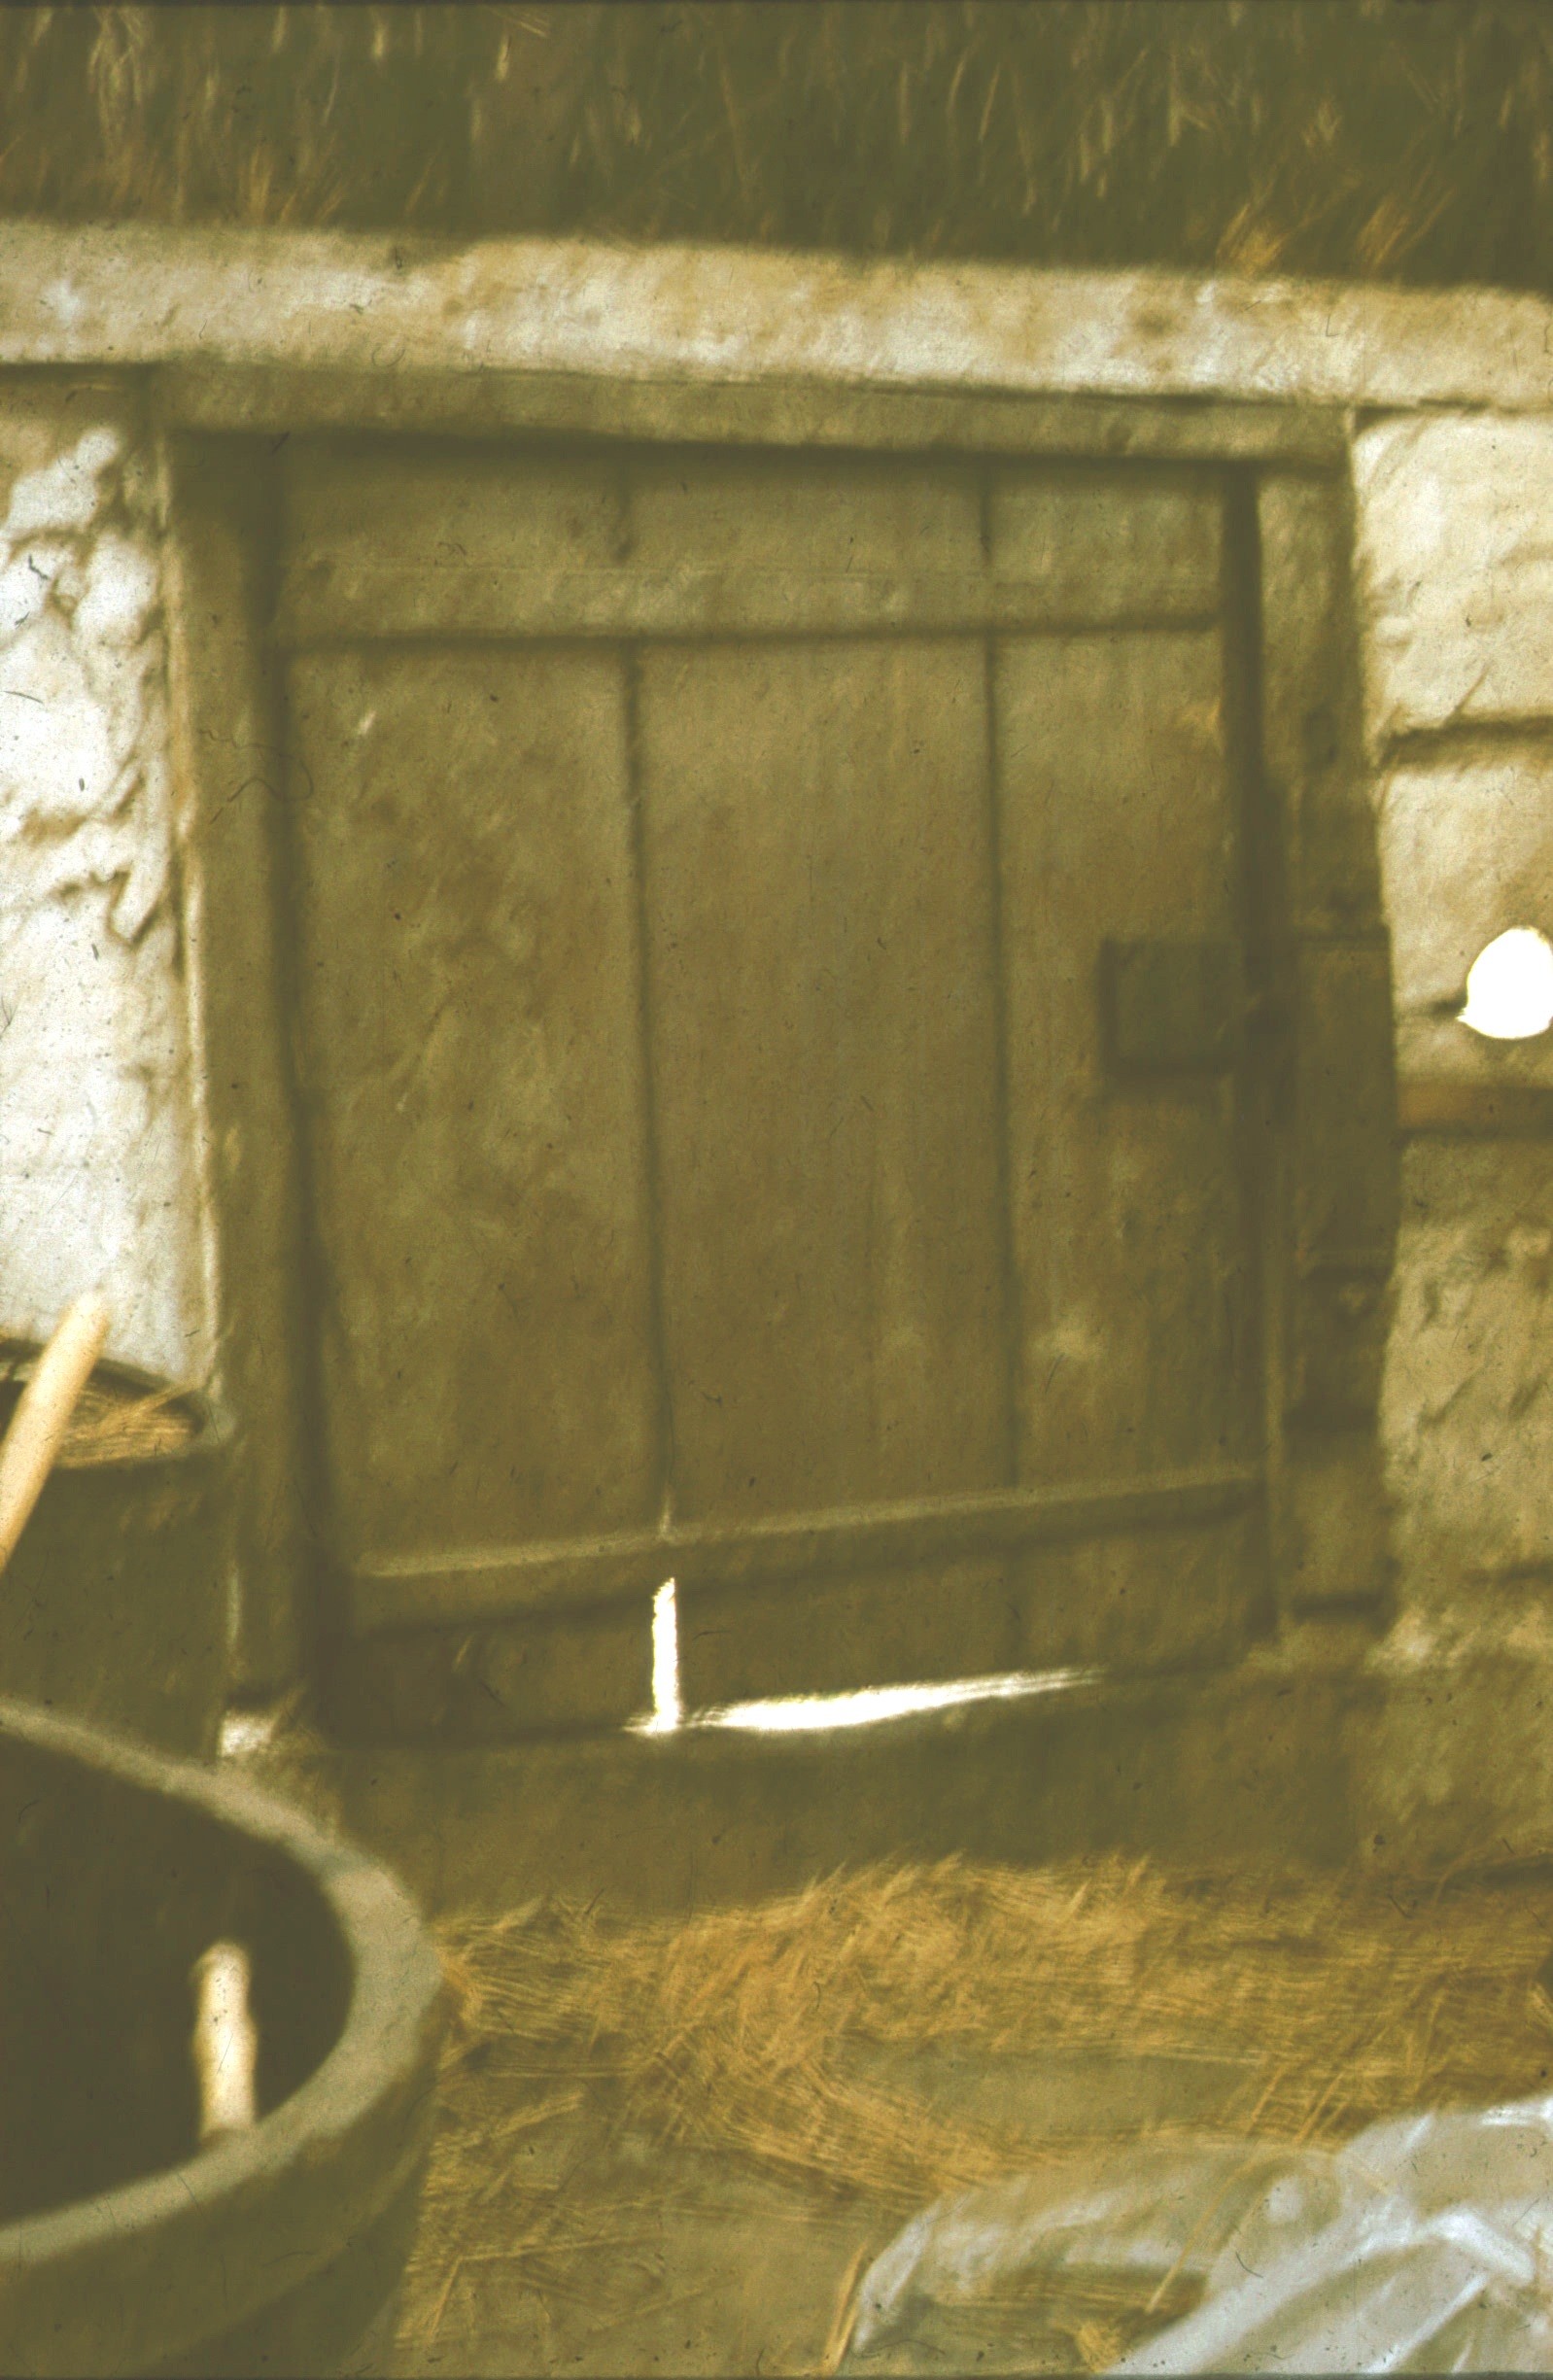 A "külső pince" bejárati ajtaja belülről (Rippl-Rónai Múzeum CC BY-NC-ND)